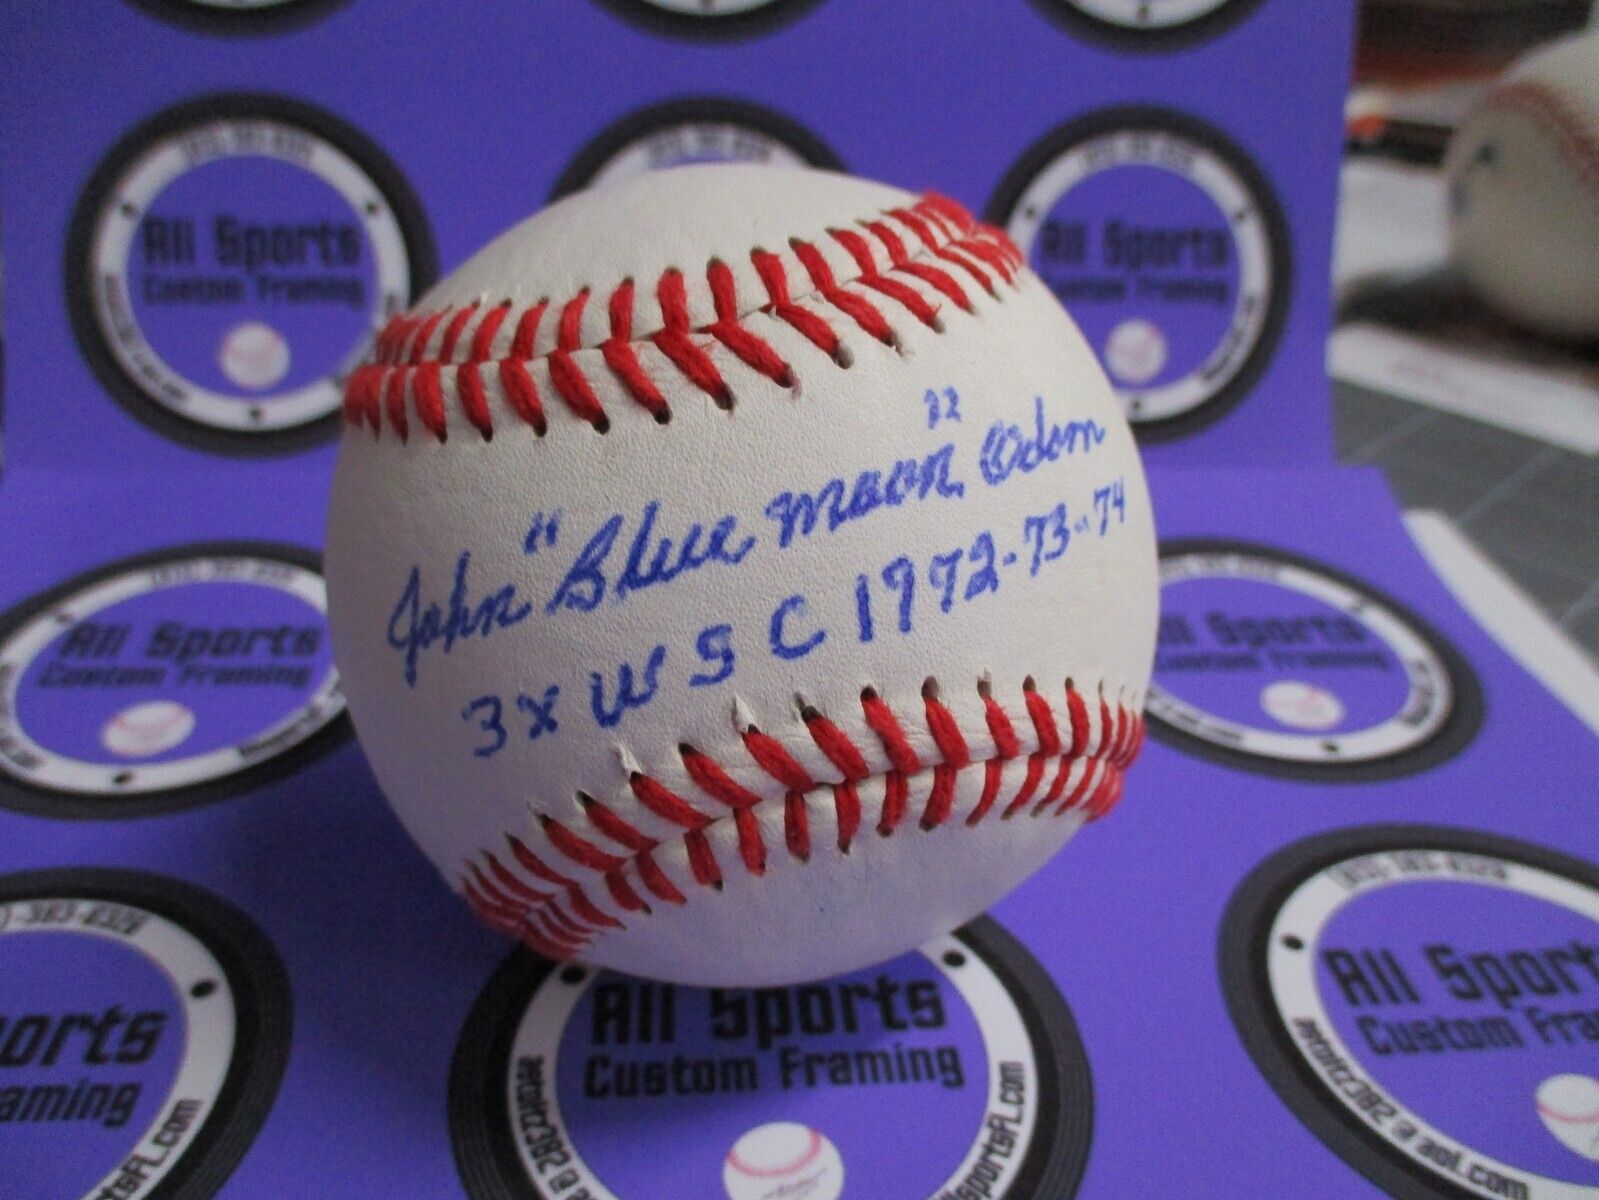 John Blue Moon Odem Oakland Athletics Autographed Baseball JSA #AD60422